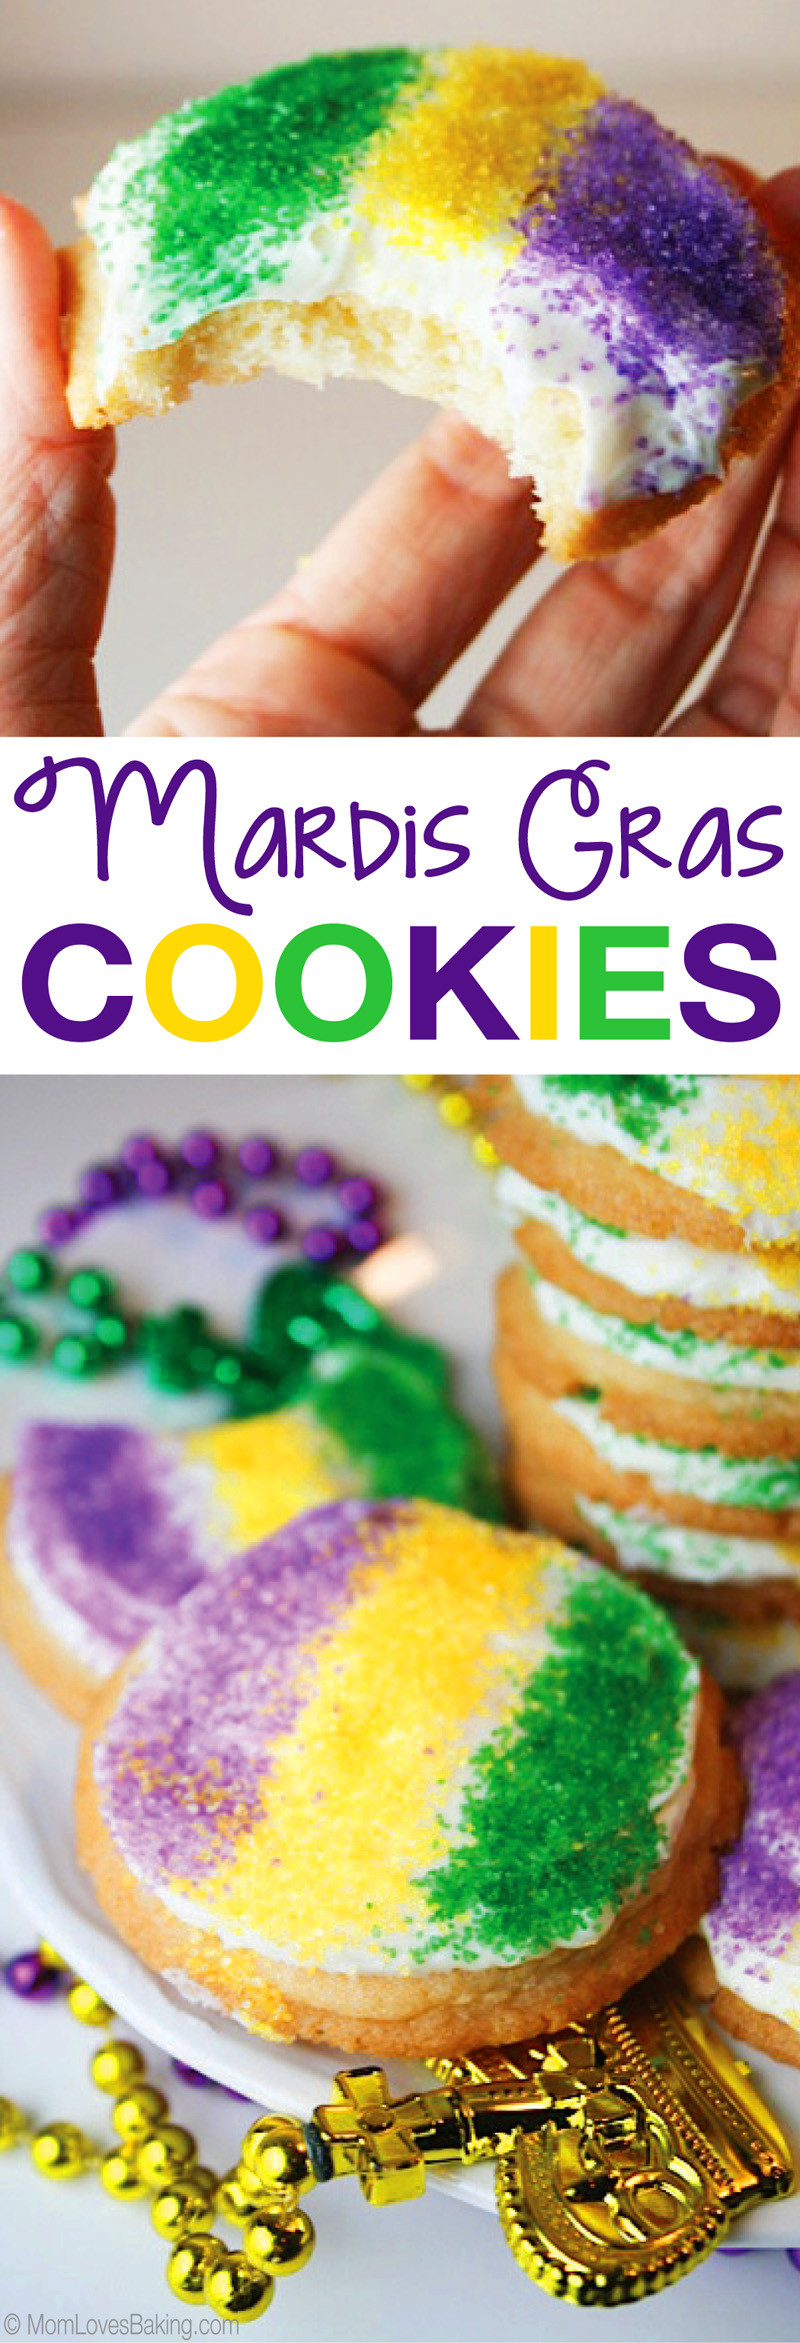 Desserts For Mardi Gras
 Amazing Mardi Gras Treats To Bring To The fice Next Week